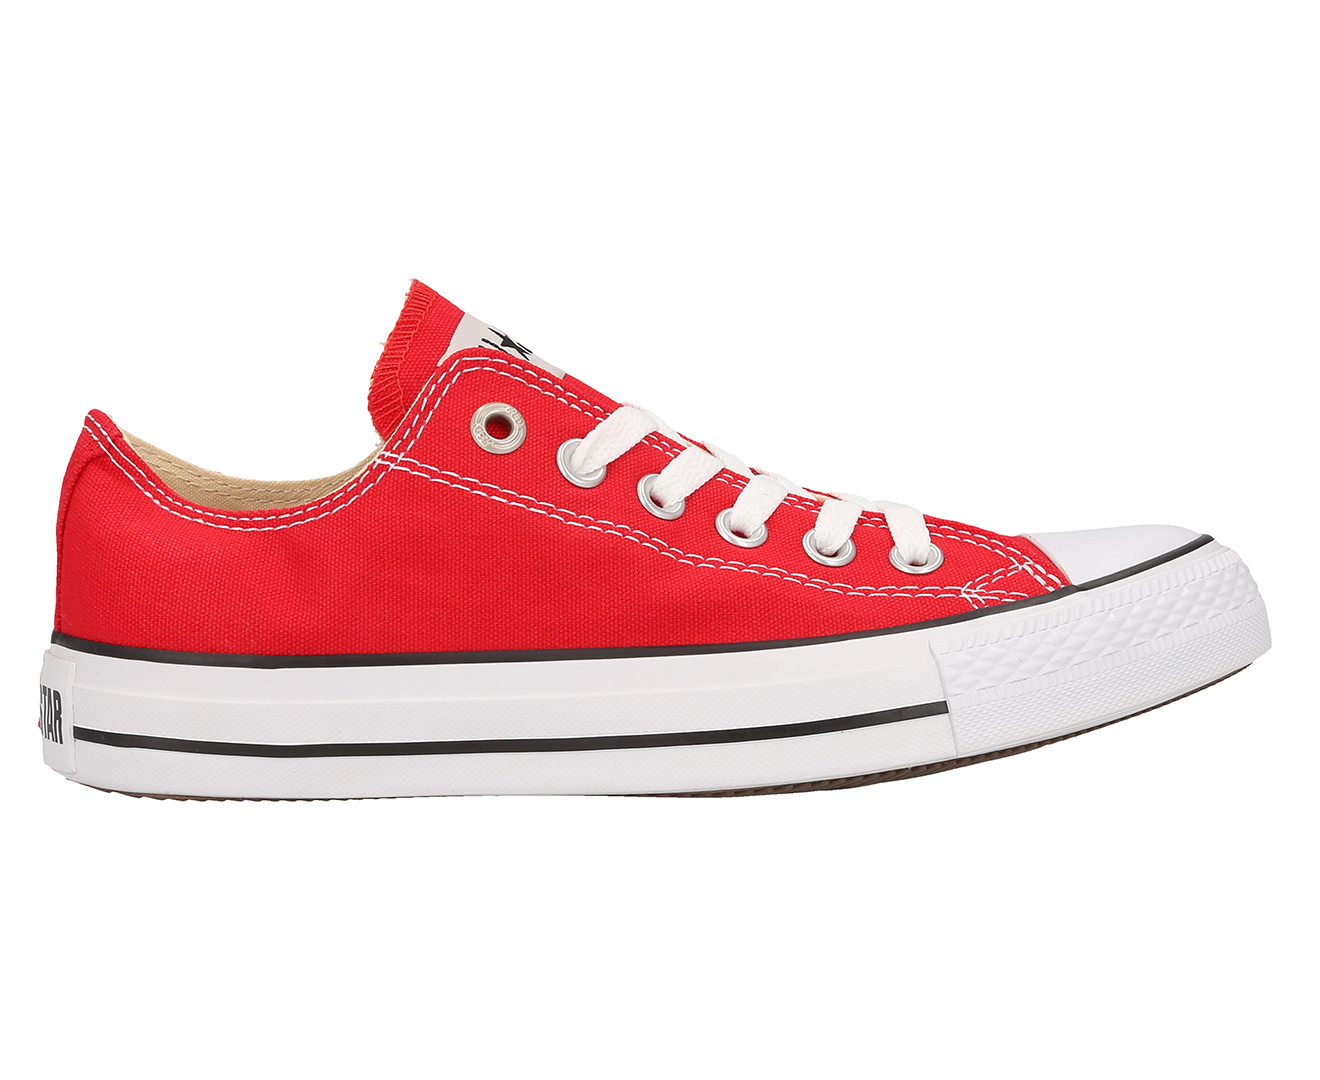 Converse Chuck Taylor All Star Shoe - Ox Red | Catch.com.au